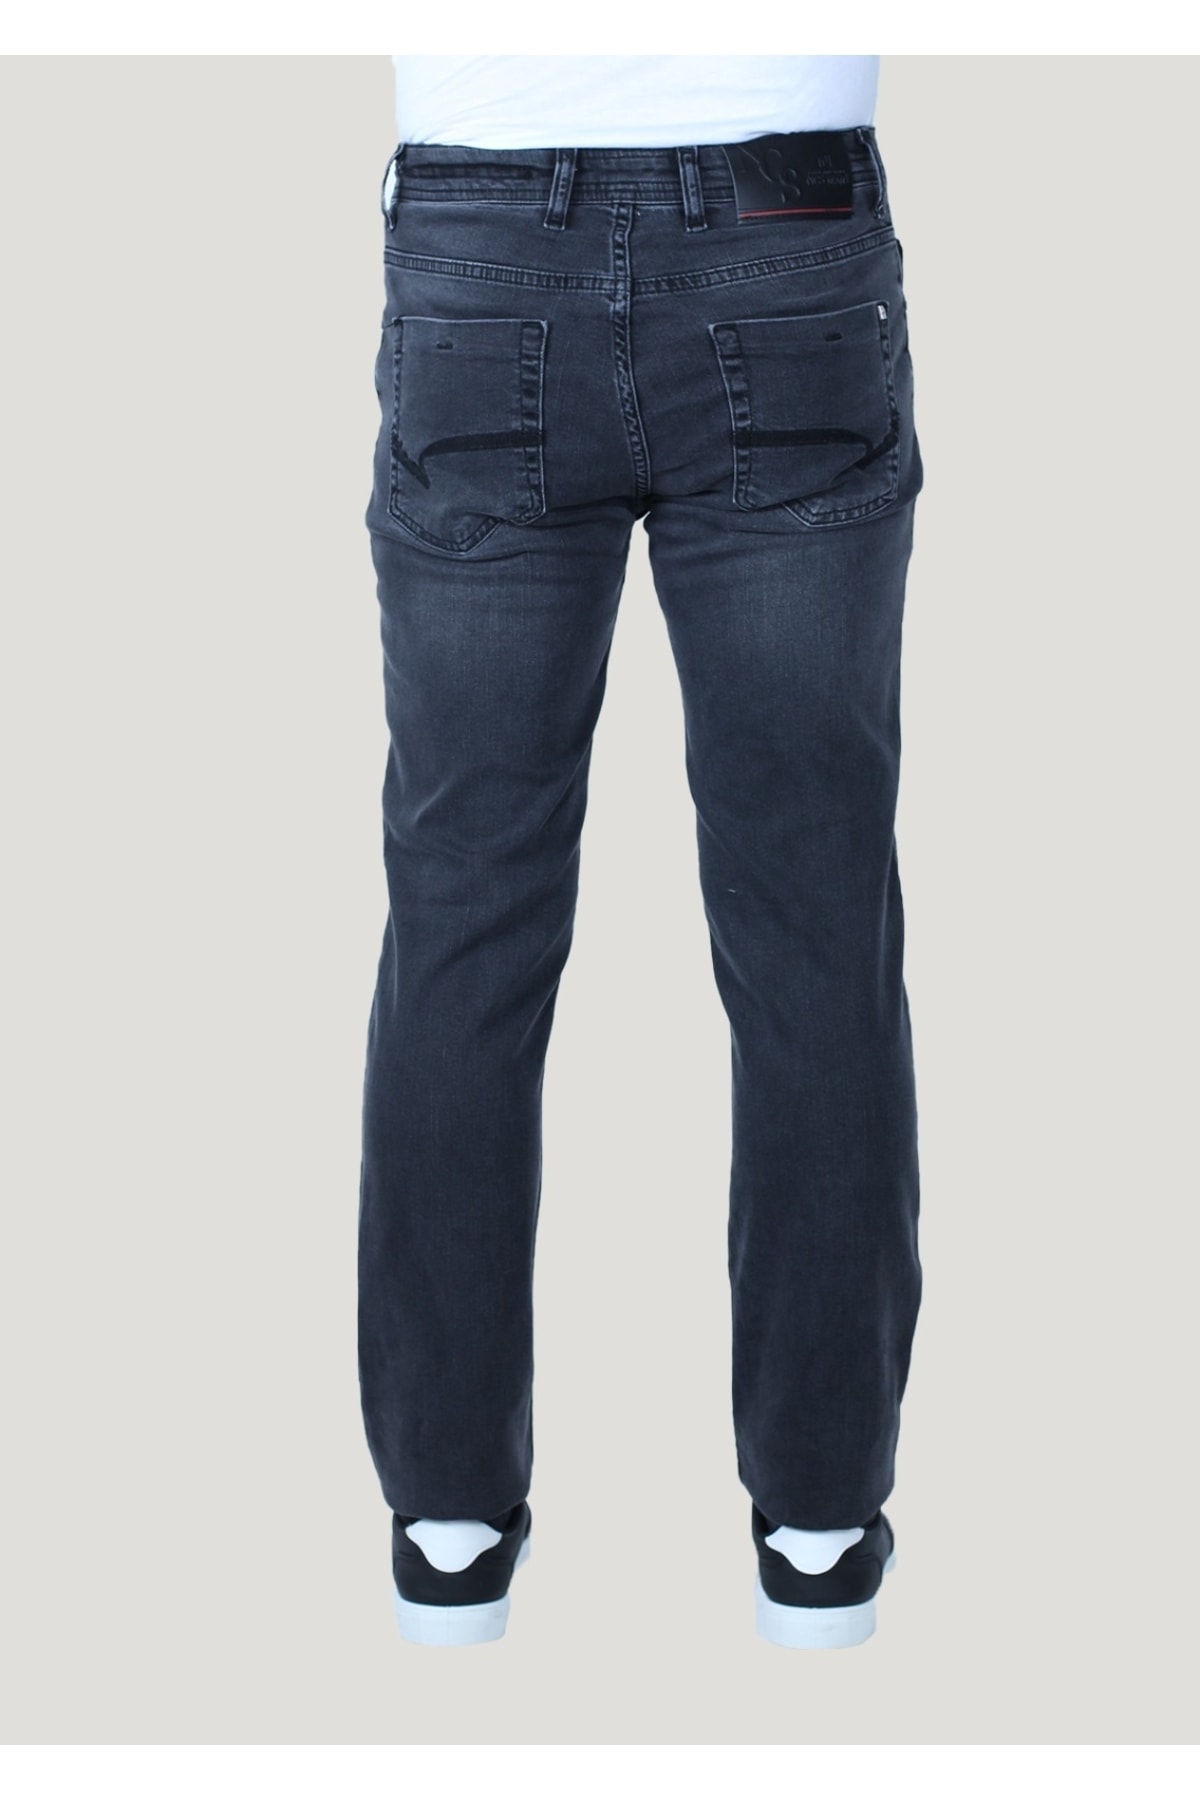 Ncs Jeans /erkek D.grey Pantolon Slim Fit Dar Kesim Denim Kumaş 5 Cepli 0576-6078-1943